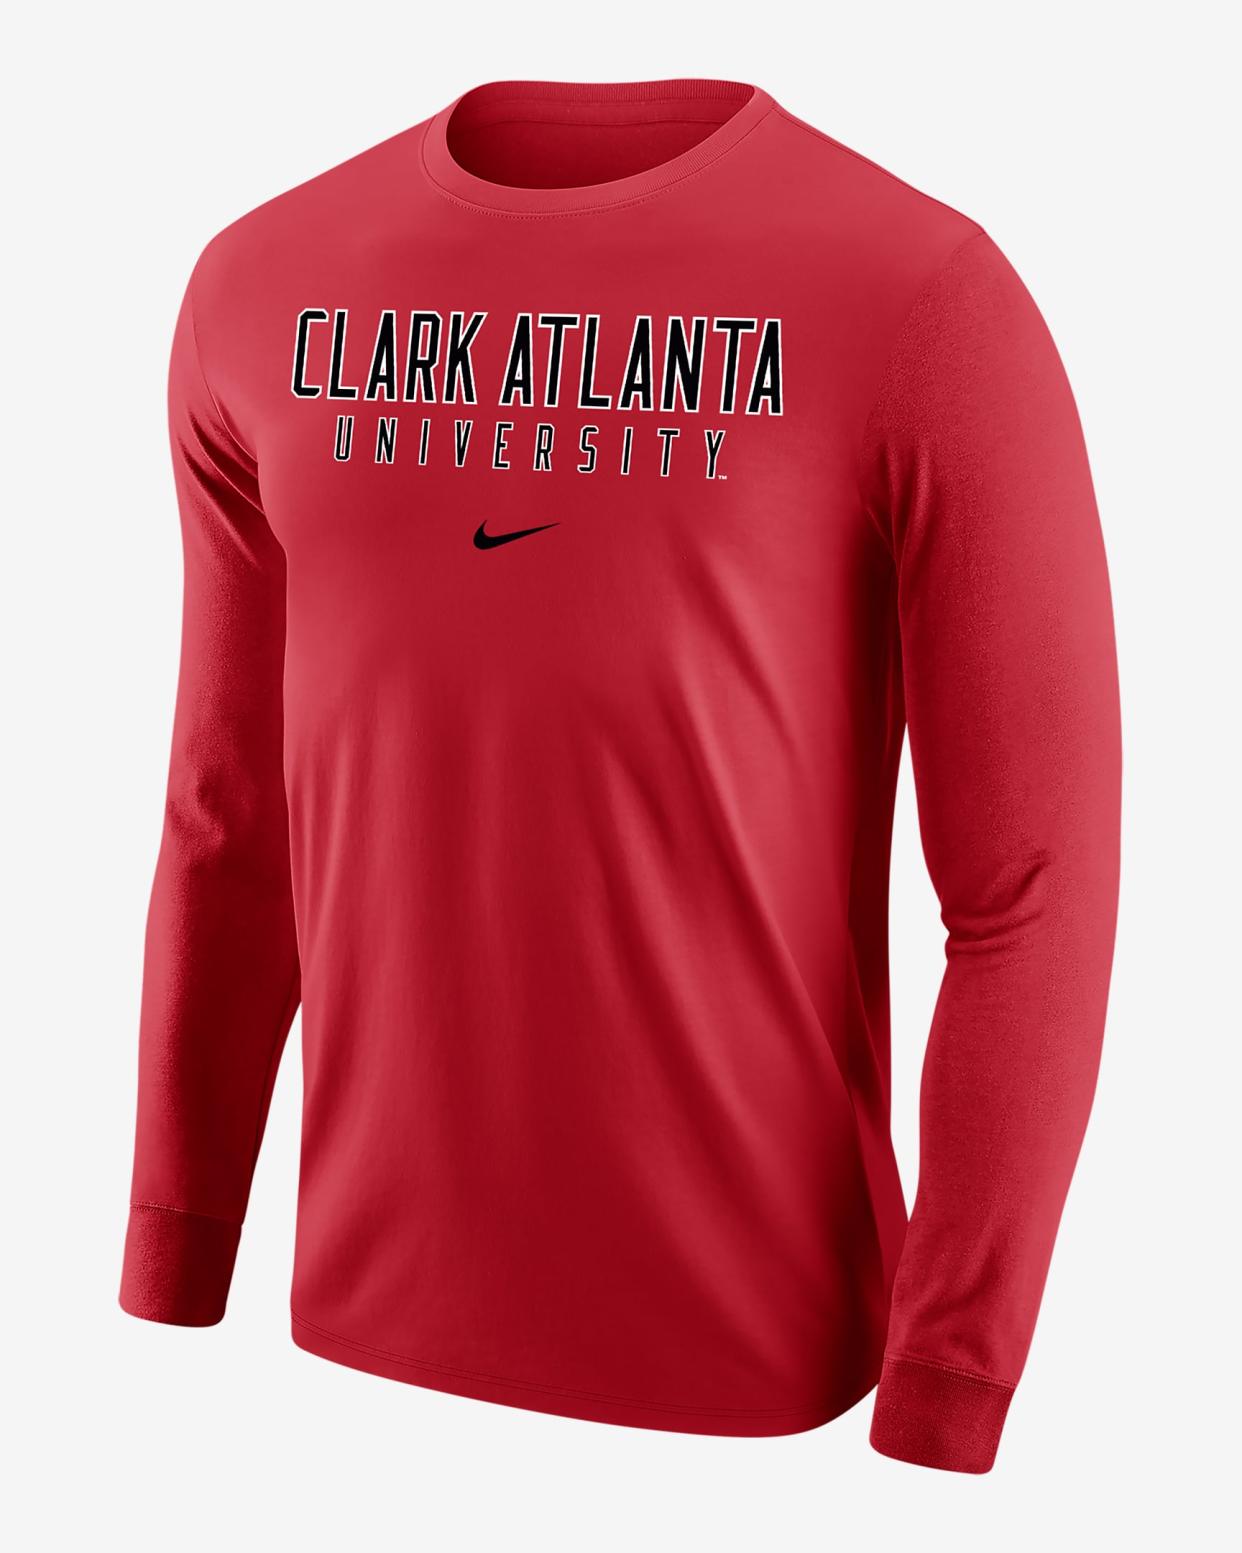 Nike College (Clark Atlanta)